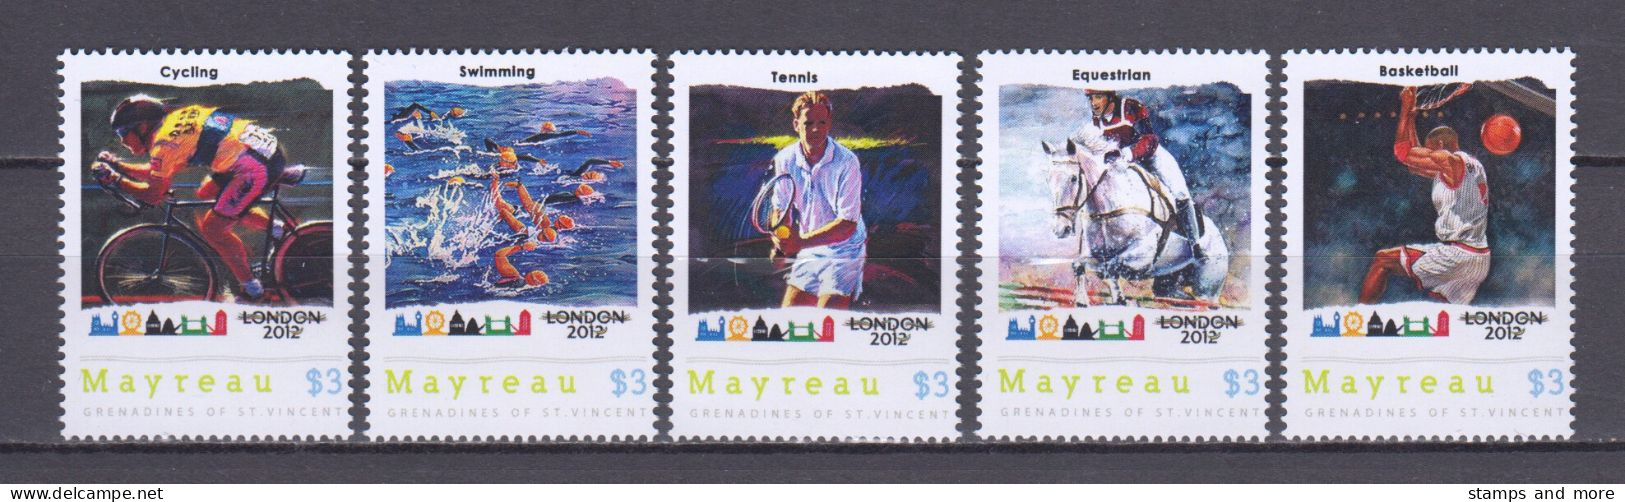 St Vincent Grenadines (Mayreau)  - MNH Set - SUMMER OLYMPICS LONDON 2012 - Sommer 2012: London